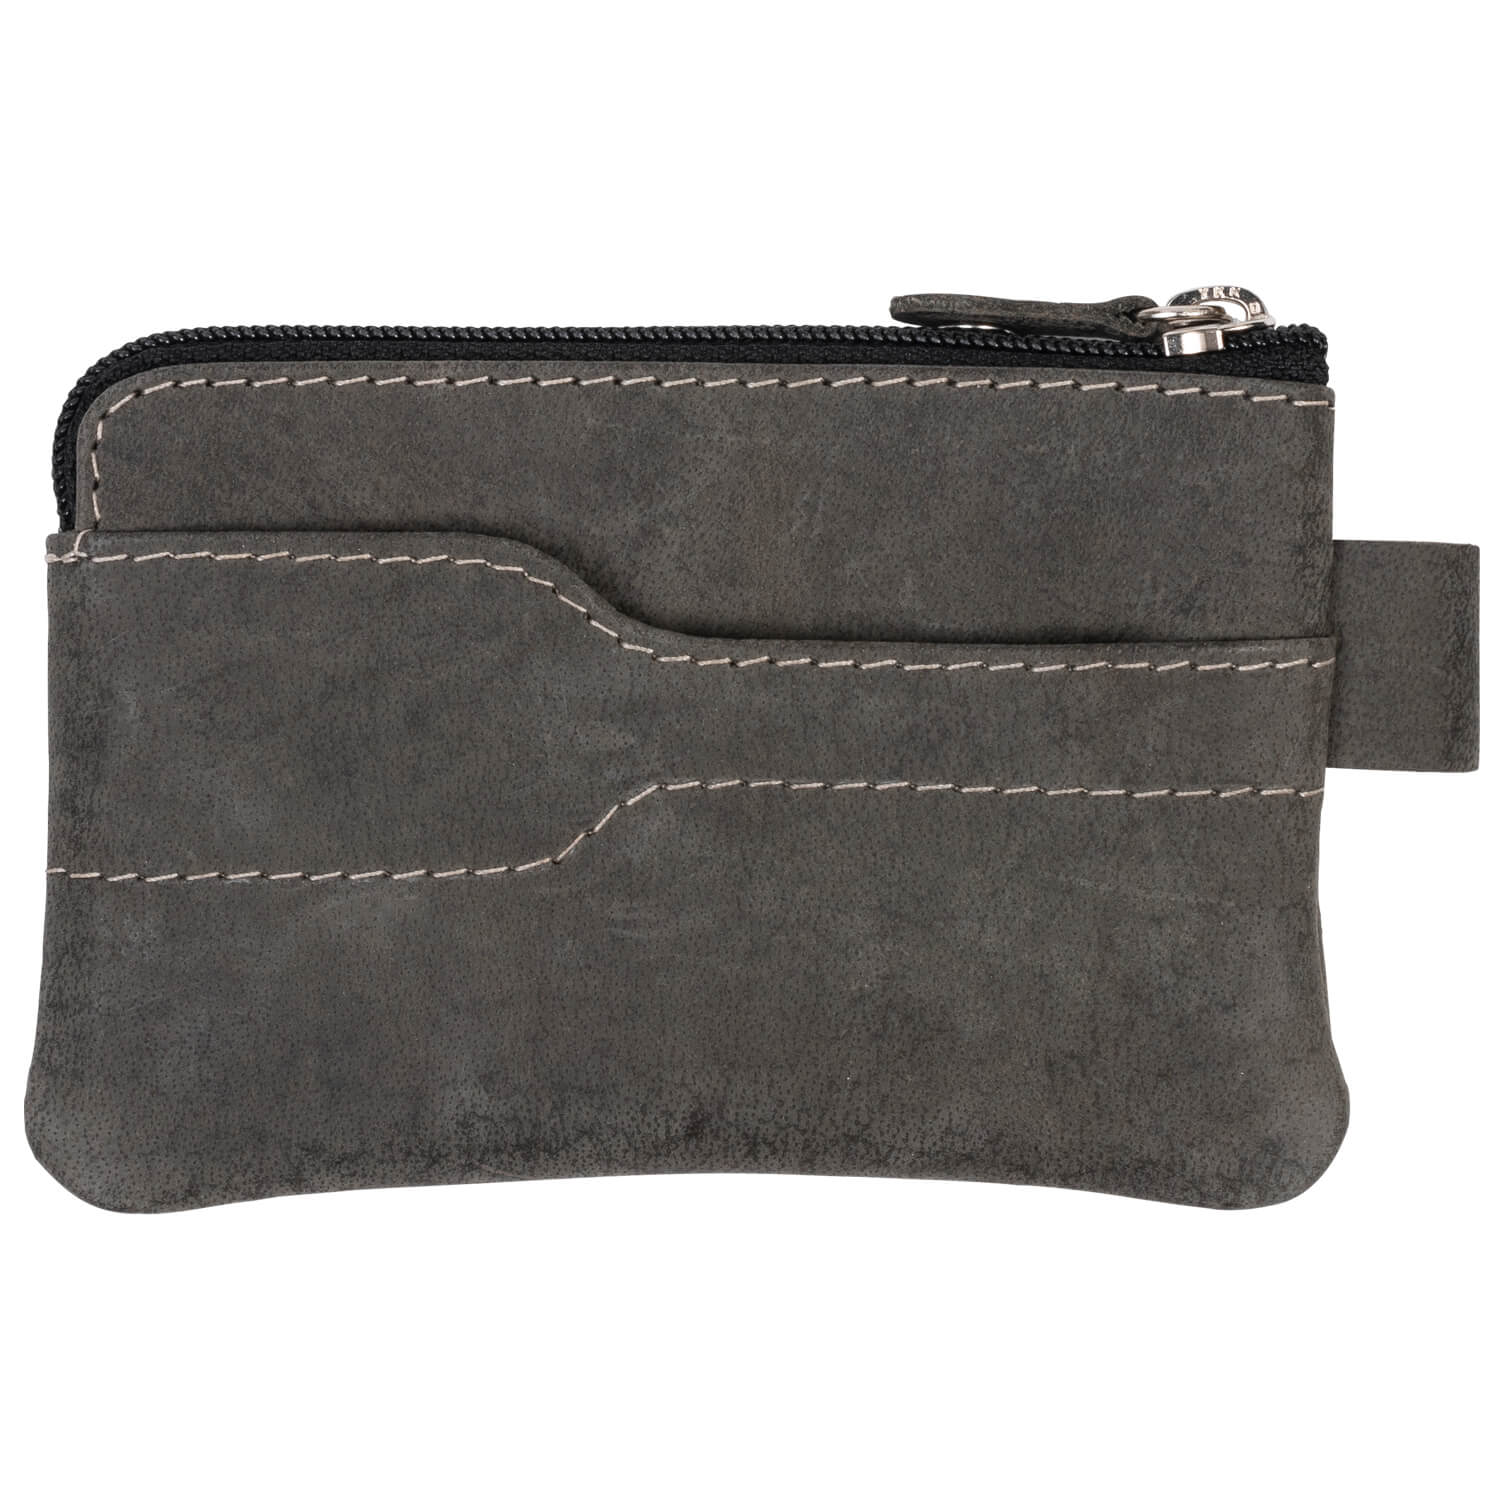 Bild 2: Gray Leather Key Pouch